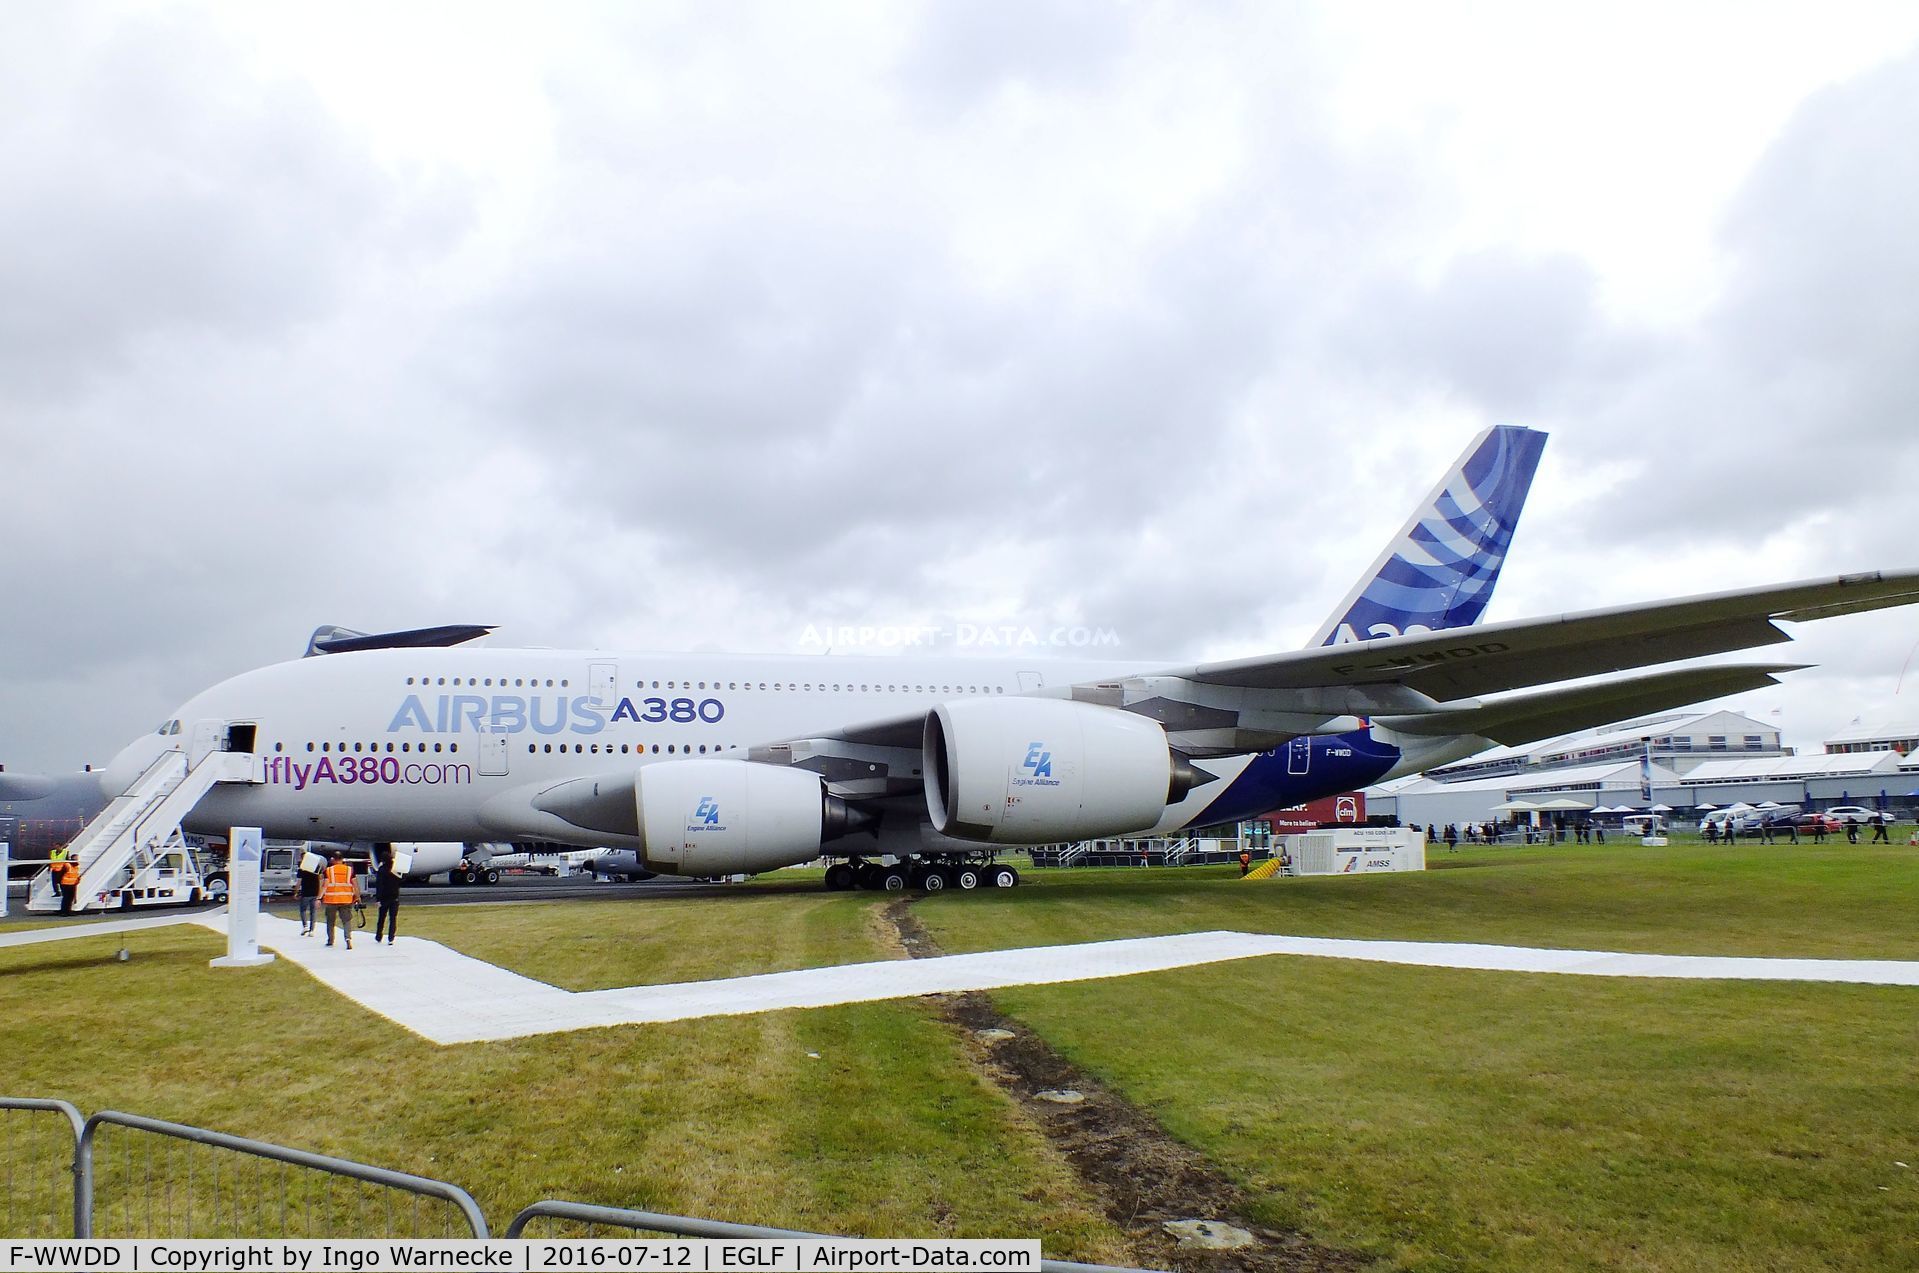 F-WWDD, 2005 Airbus A380-861 C/N 004, Airbus A380-861 at Farnborough International 2016